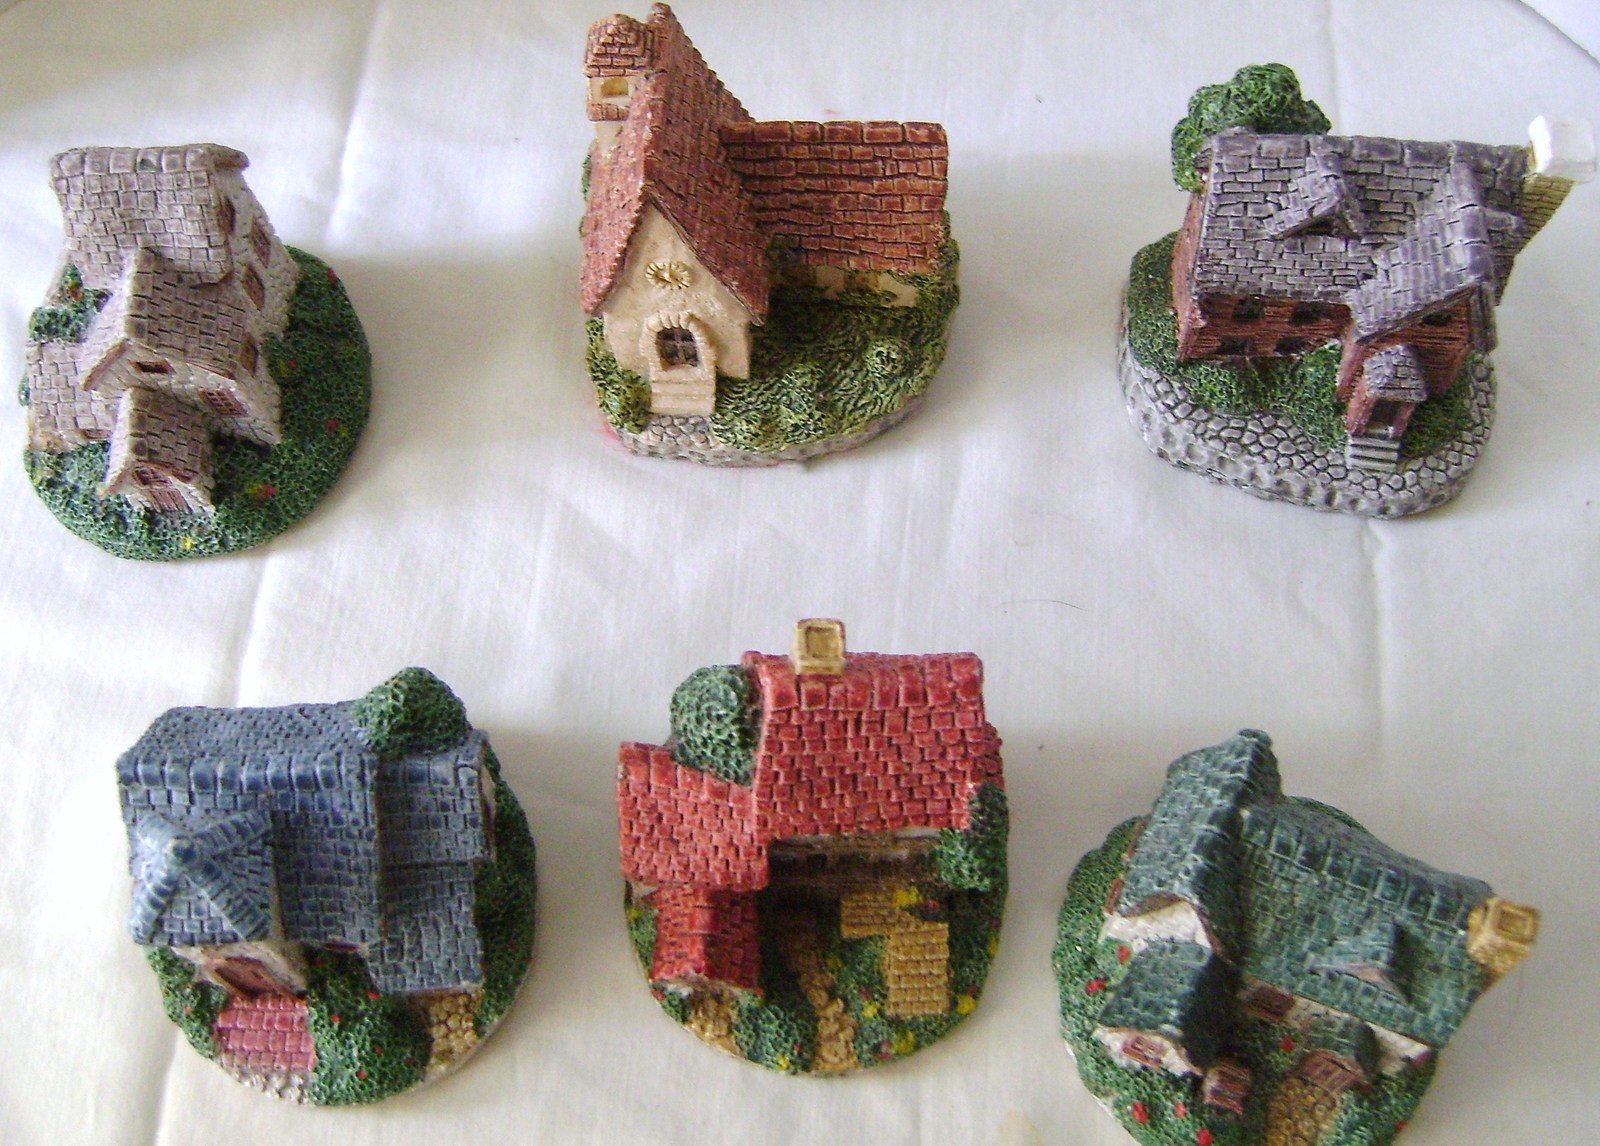 Miniature Resin Houses for Tabletop / Shelf Display - $10.00